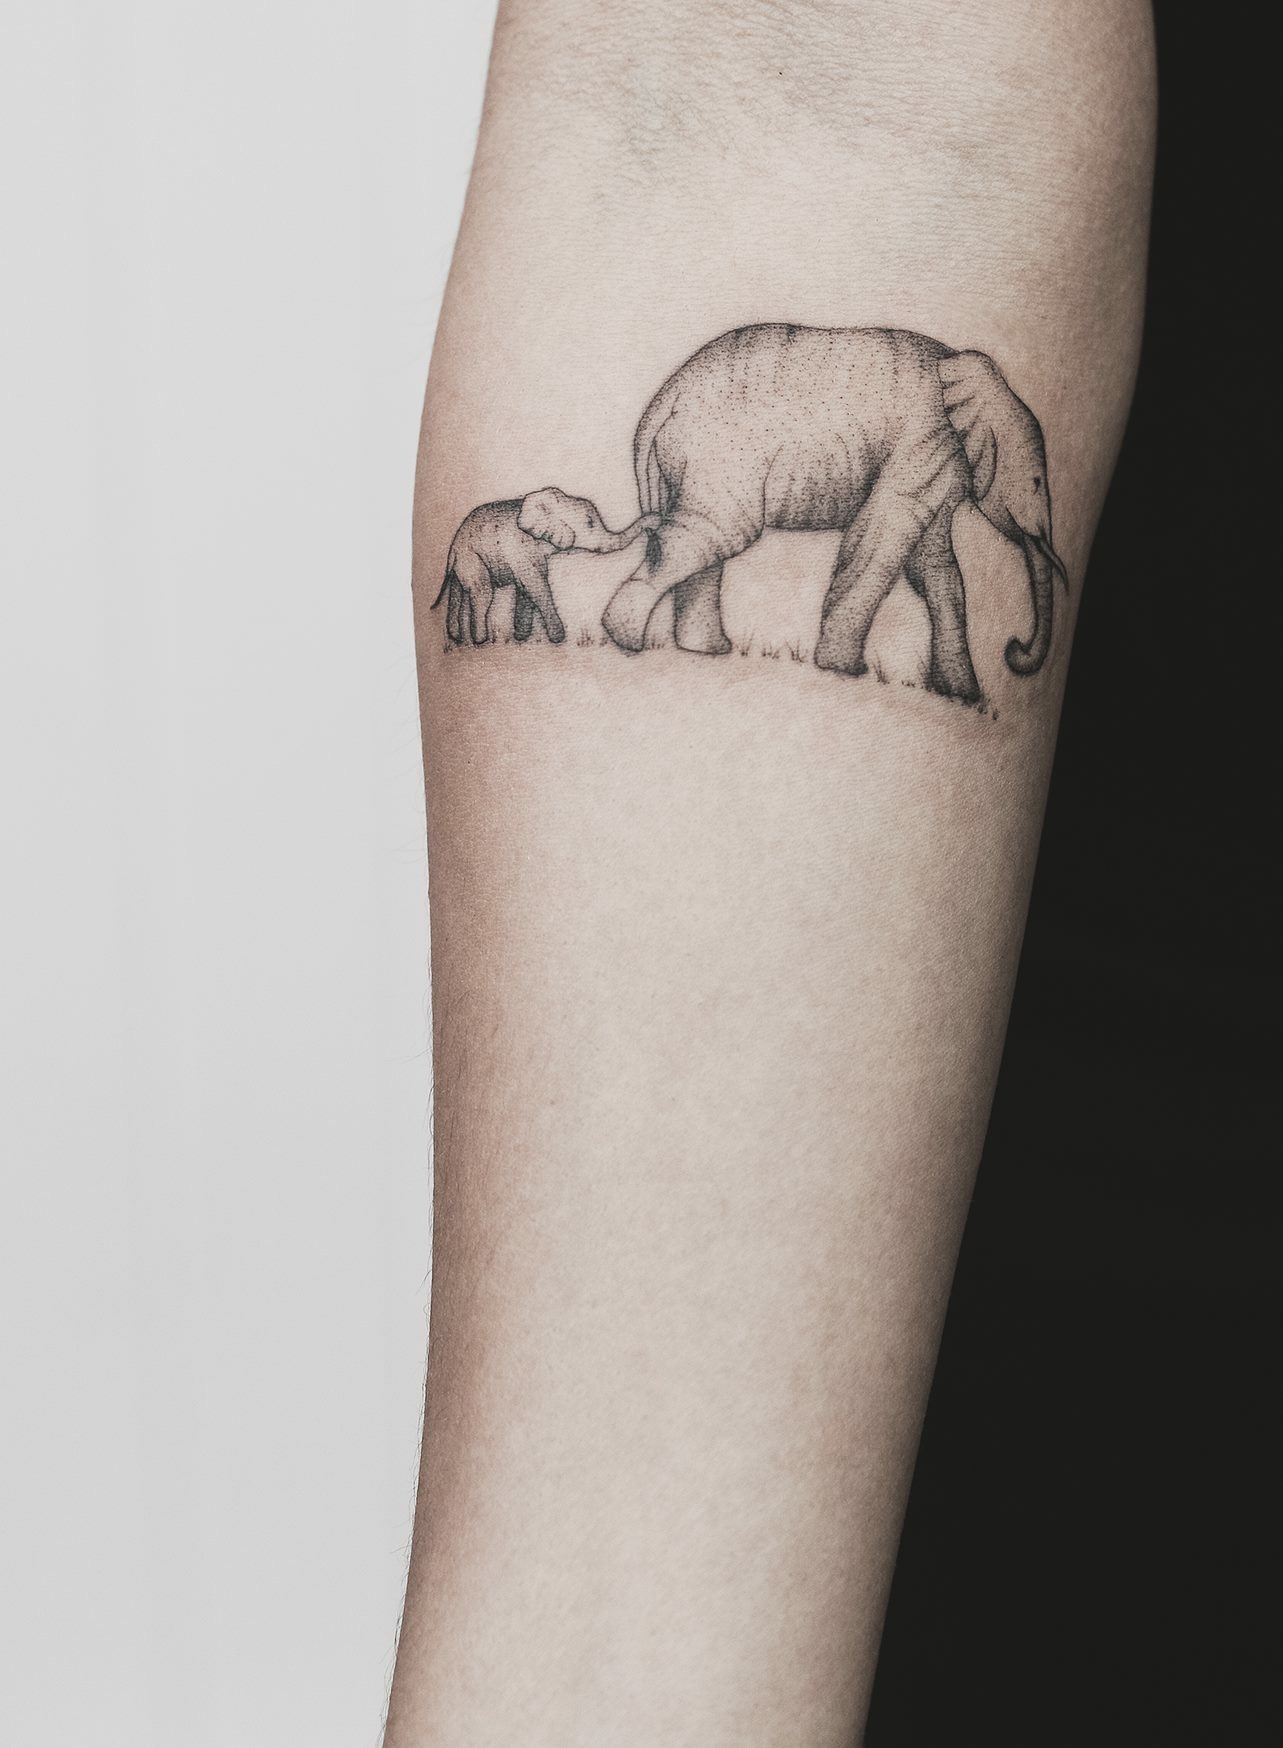 Significado del tatuaje del elefante